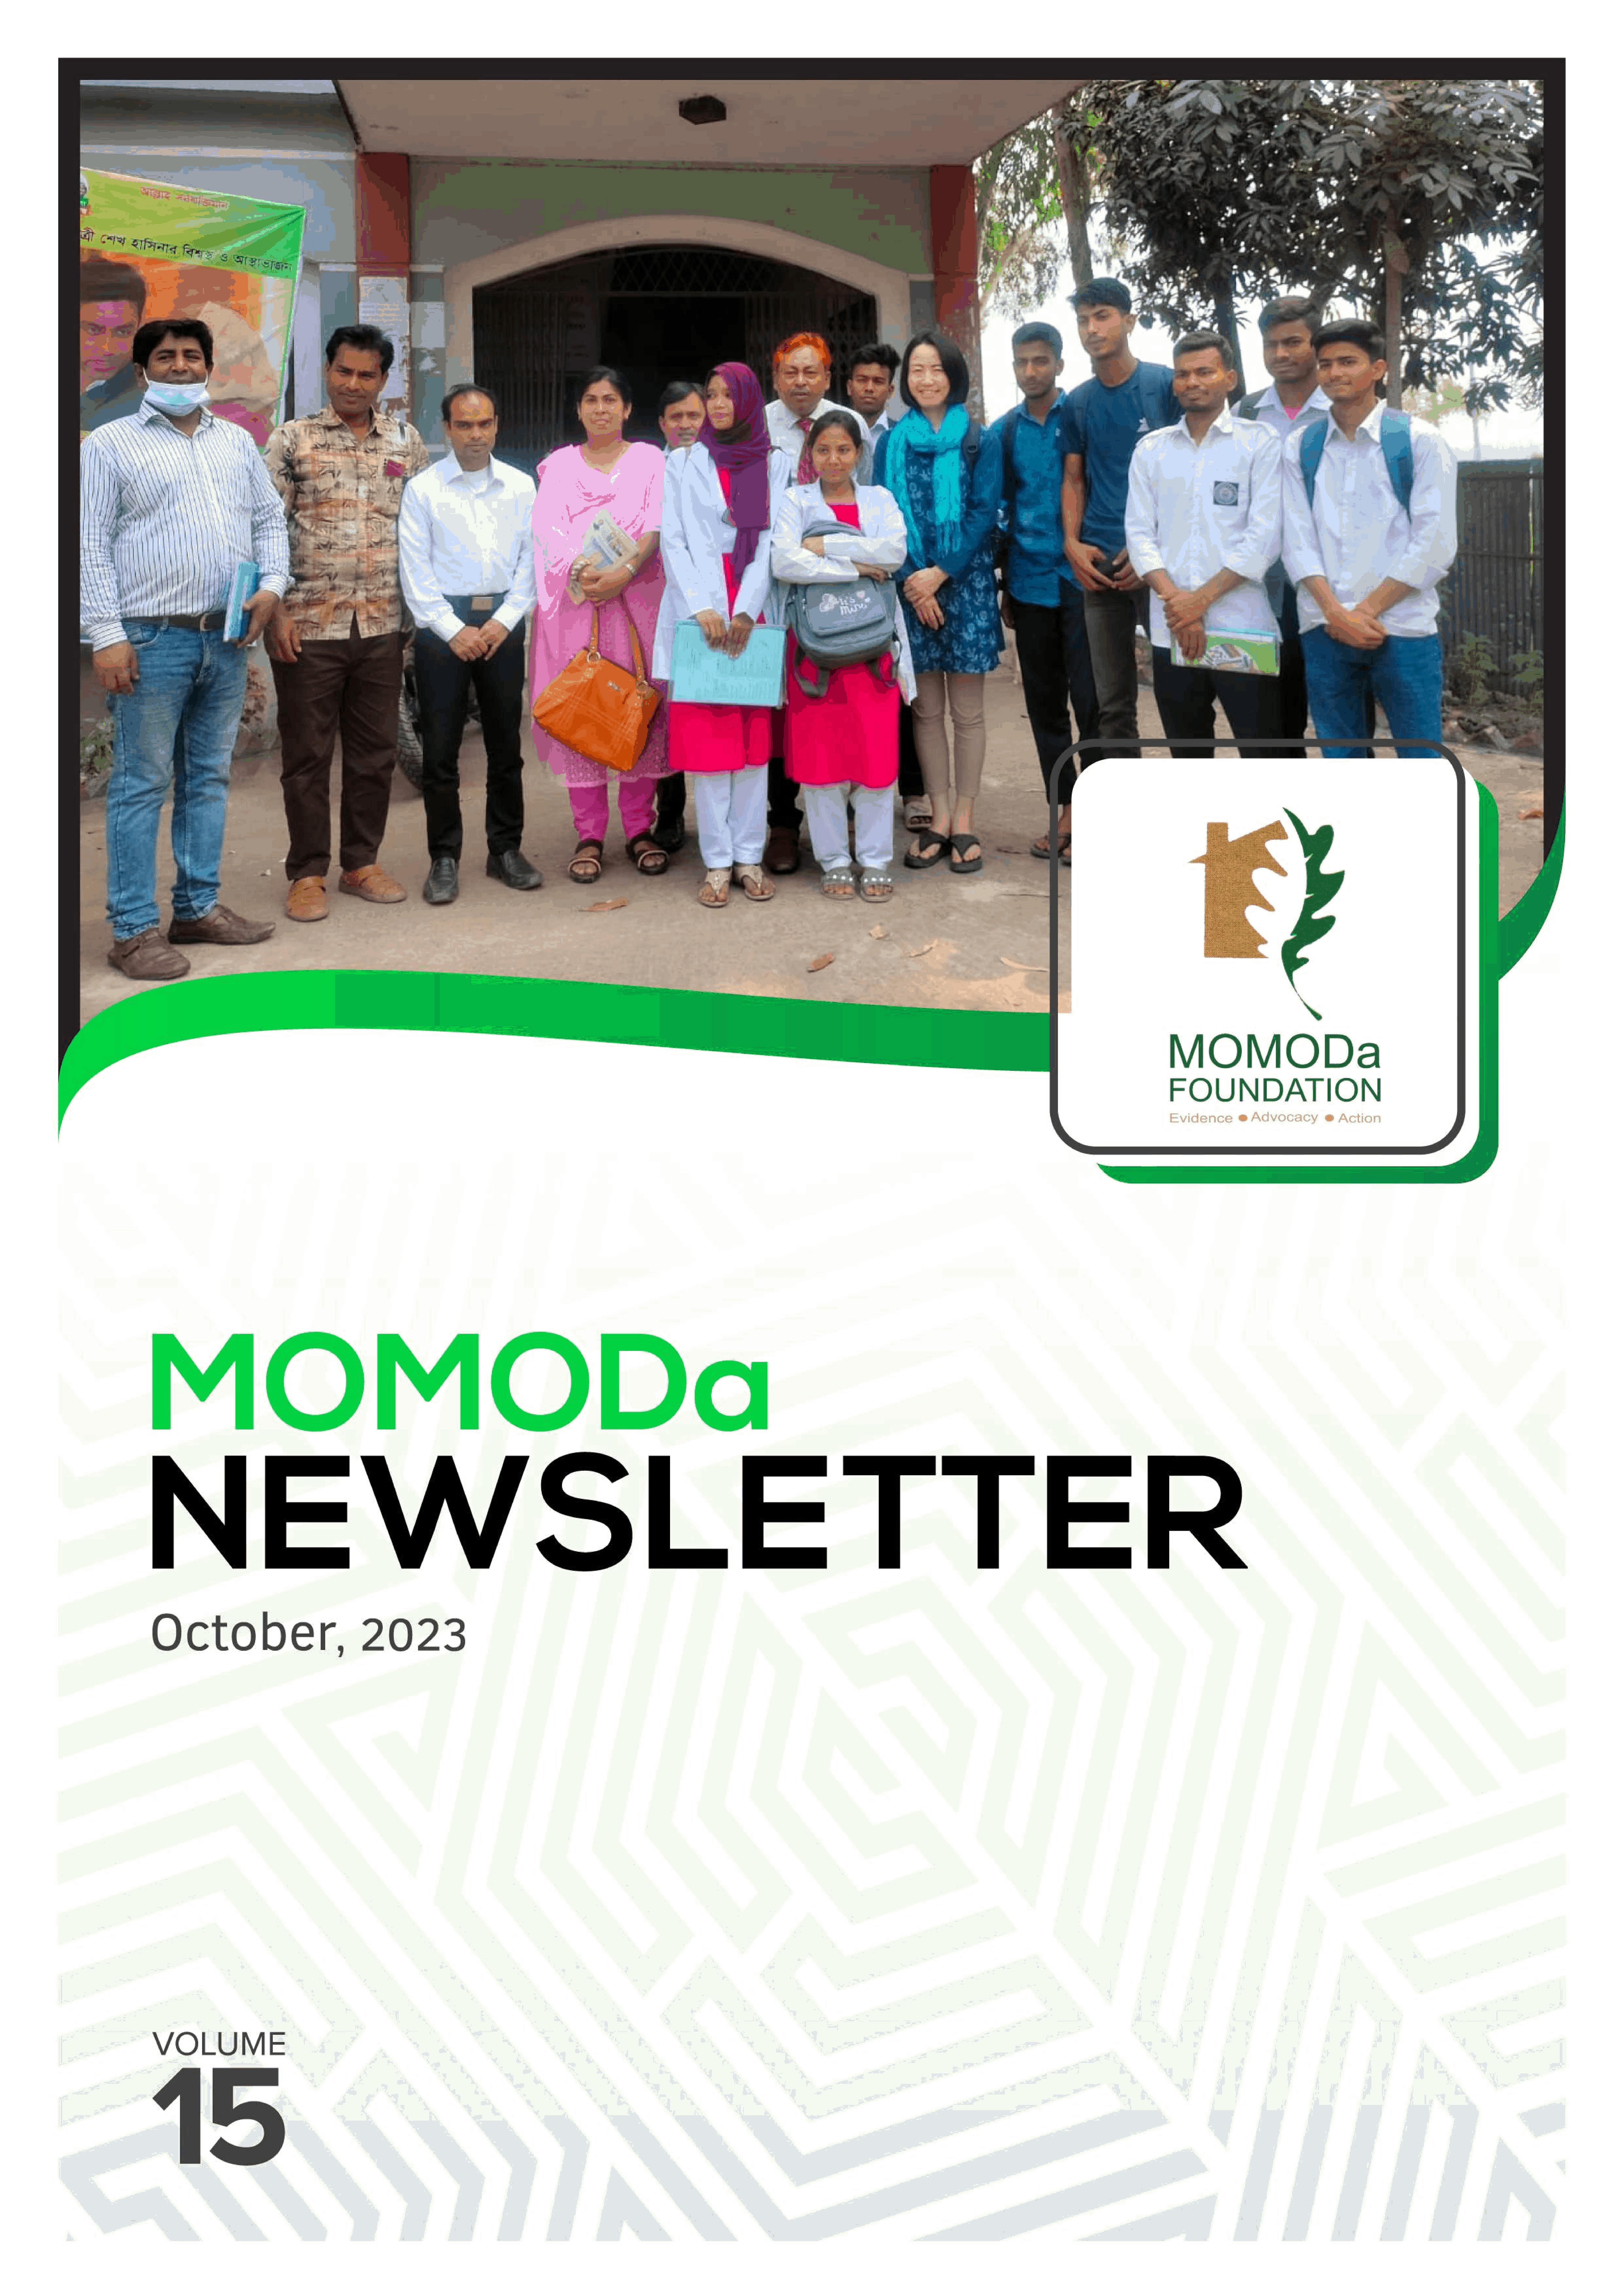 MOMODa FOUNDATION Newsletter of October 2023 (15th Volume)